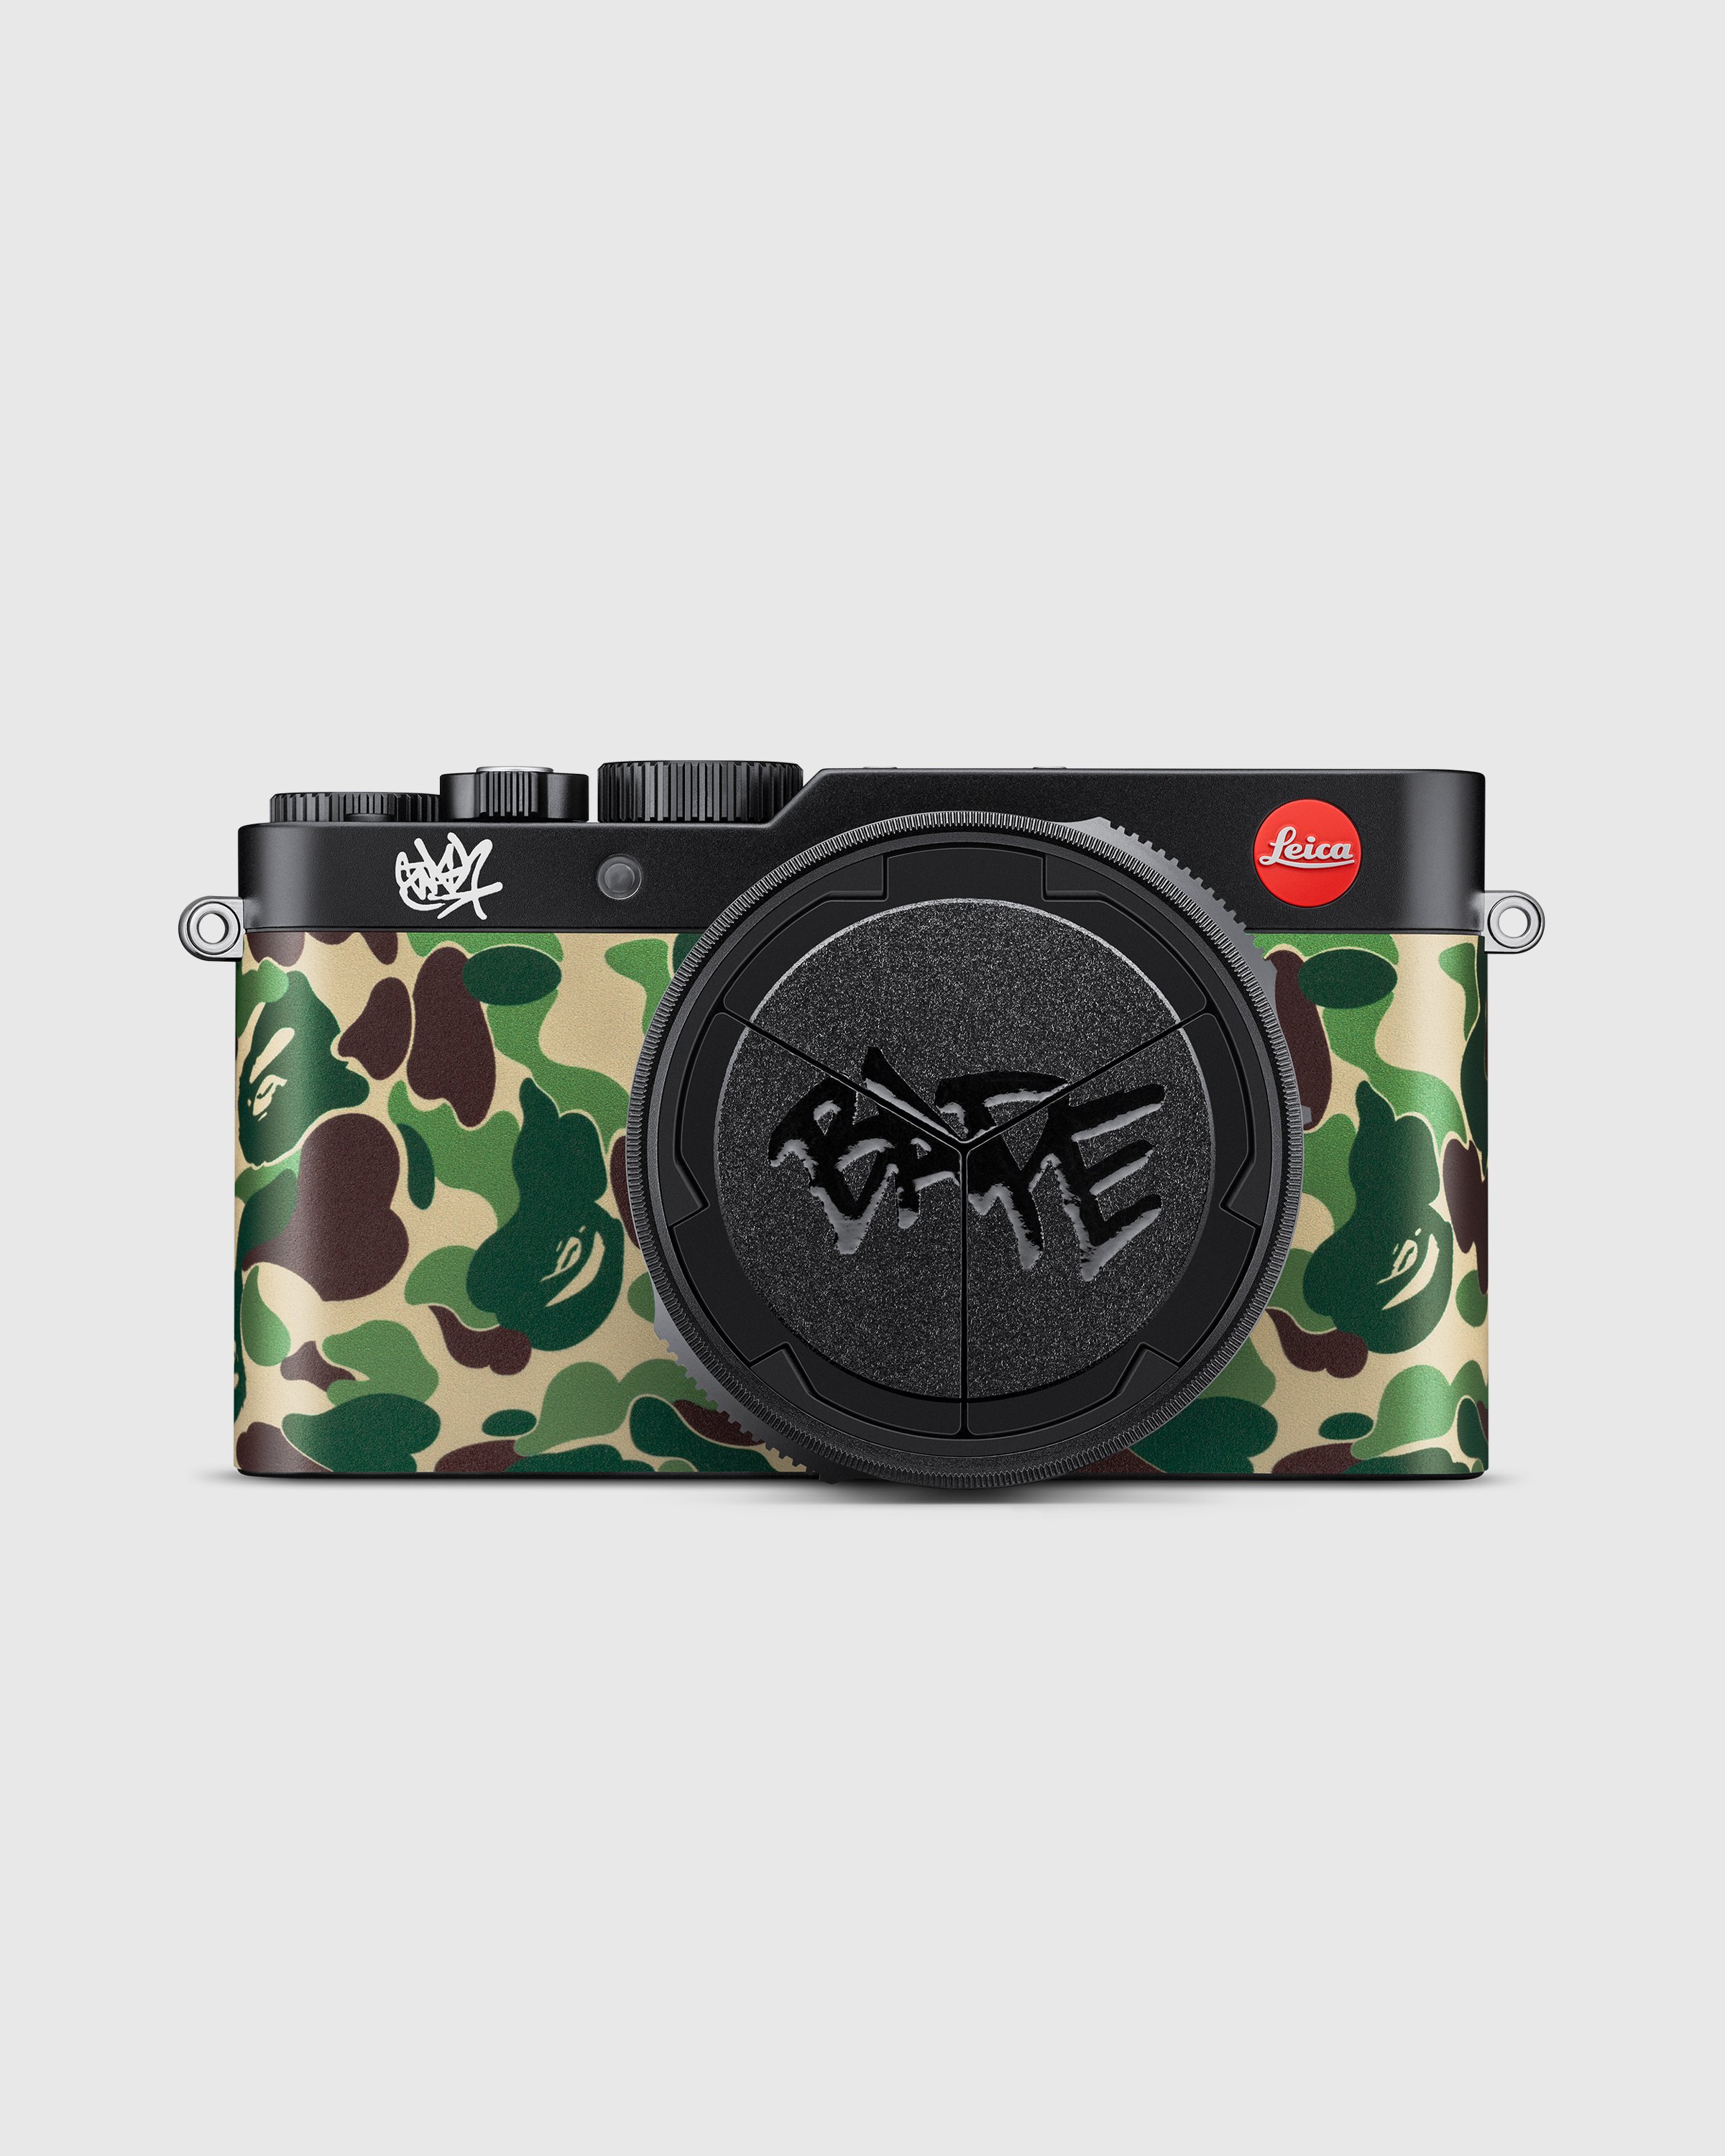 Leica - D-Lux 7 “A BATHING APE® x STASH” Edition Black - Lifestyle - Multi - Image 1